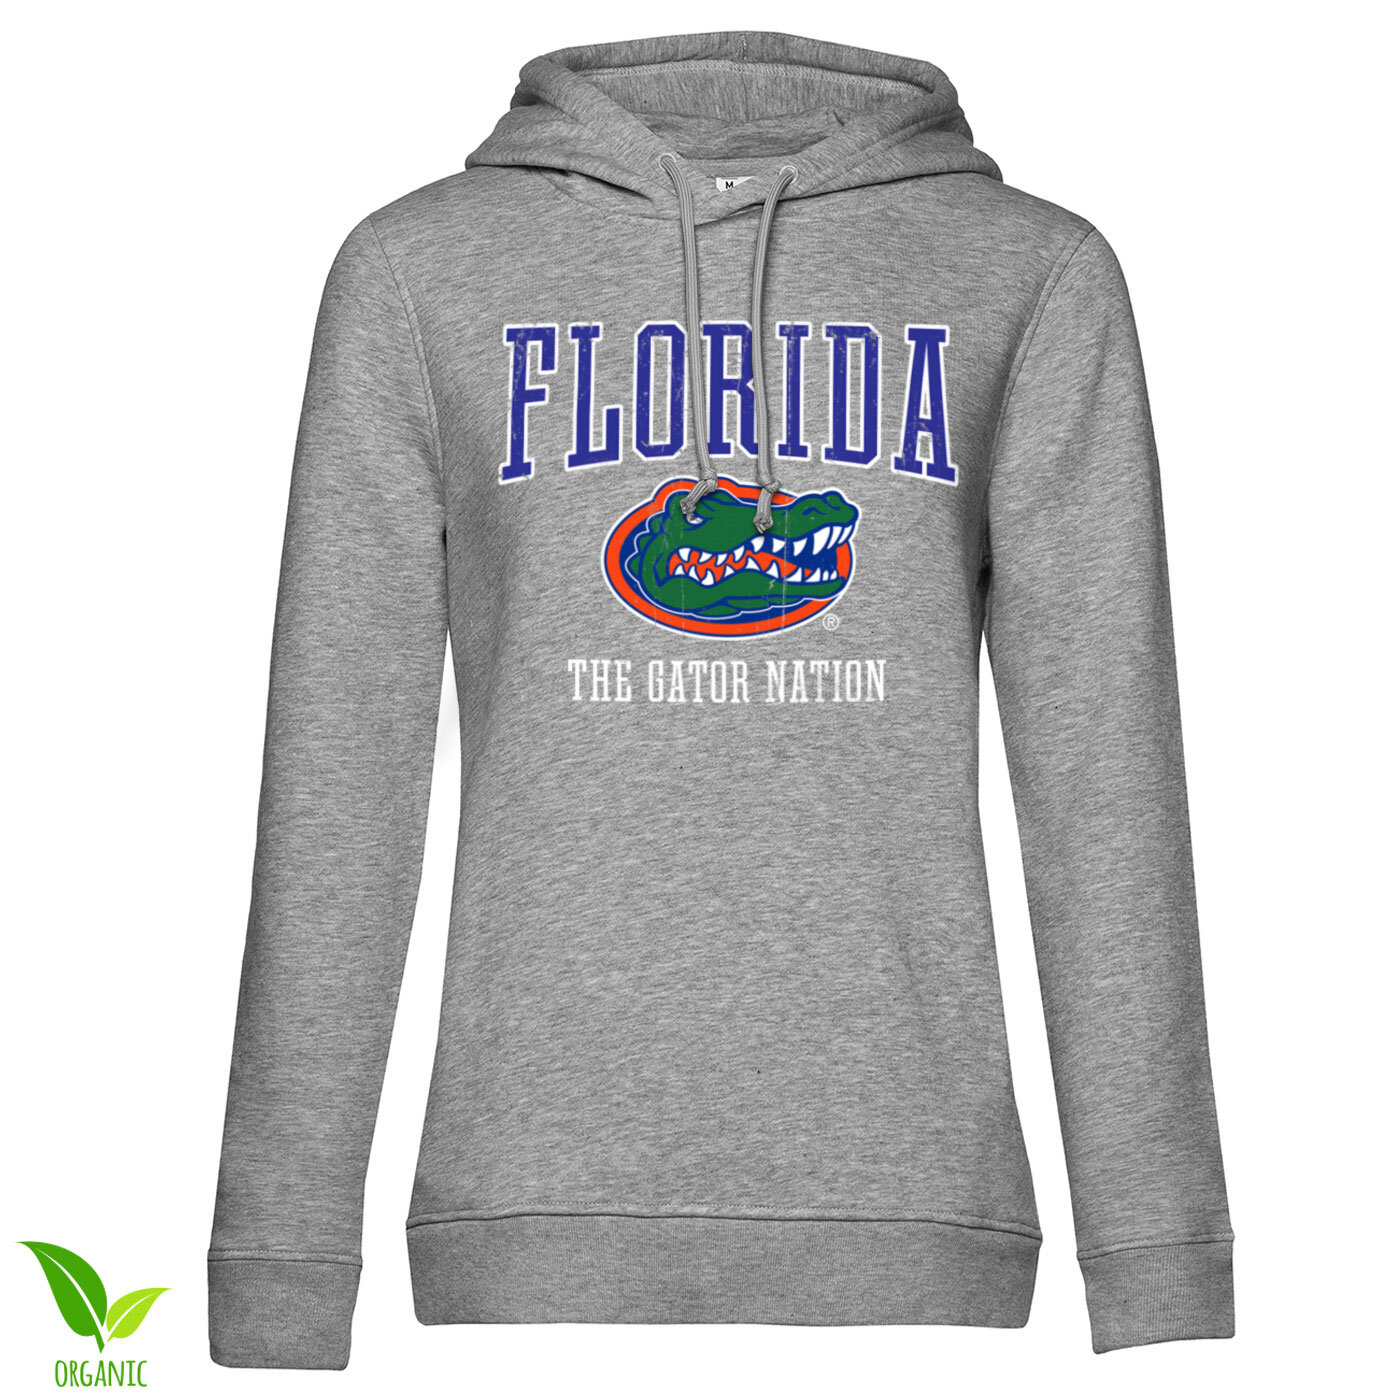 Florida - The Gator Nation Girls Hoodie